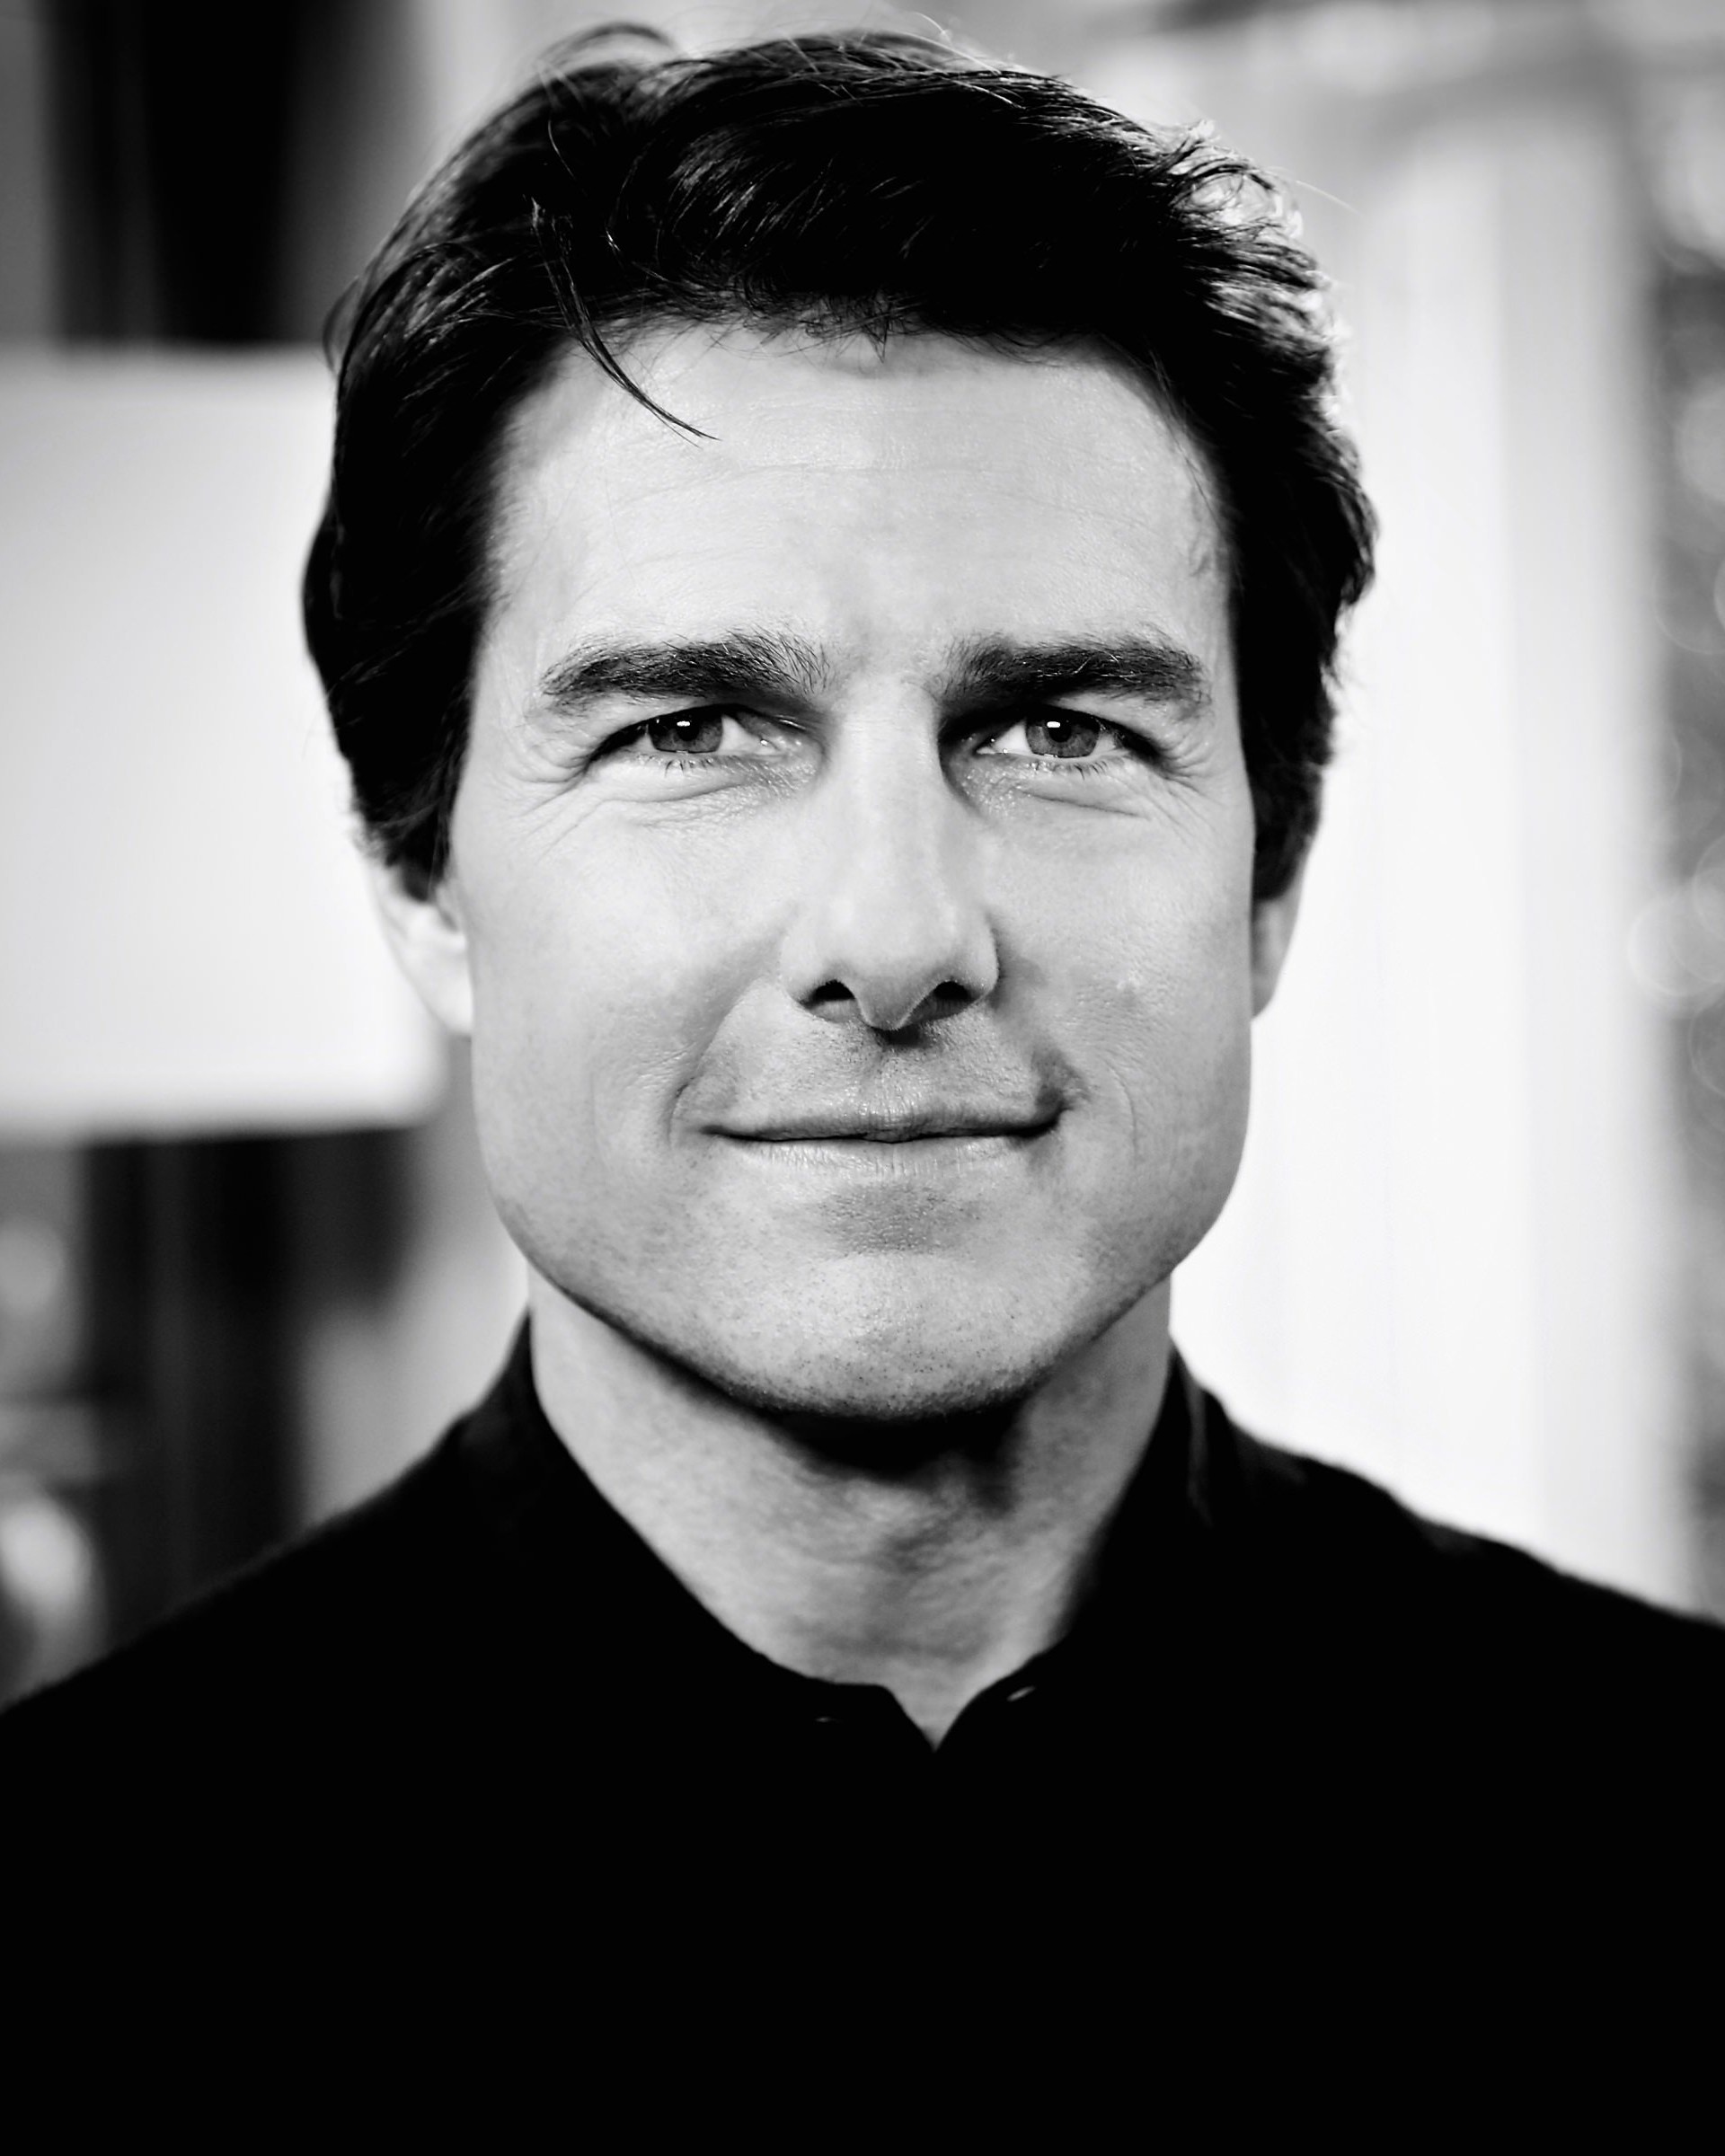 Tom Cruise Black & White Portrait Wallpaper for Google Nexus 7